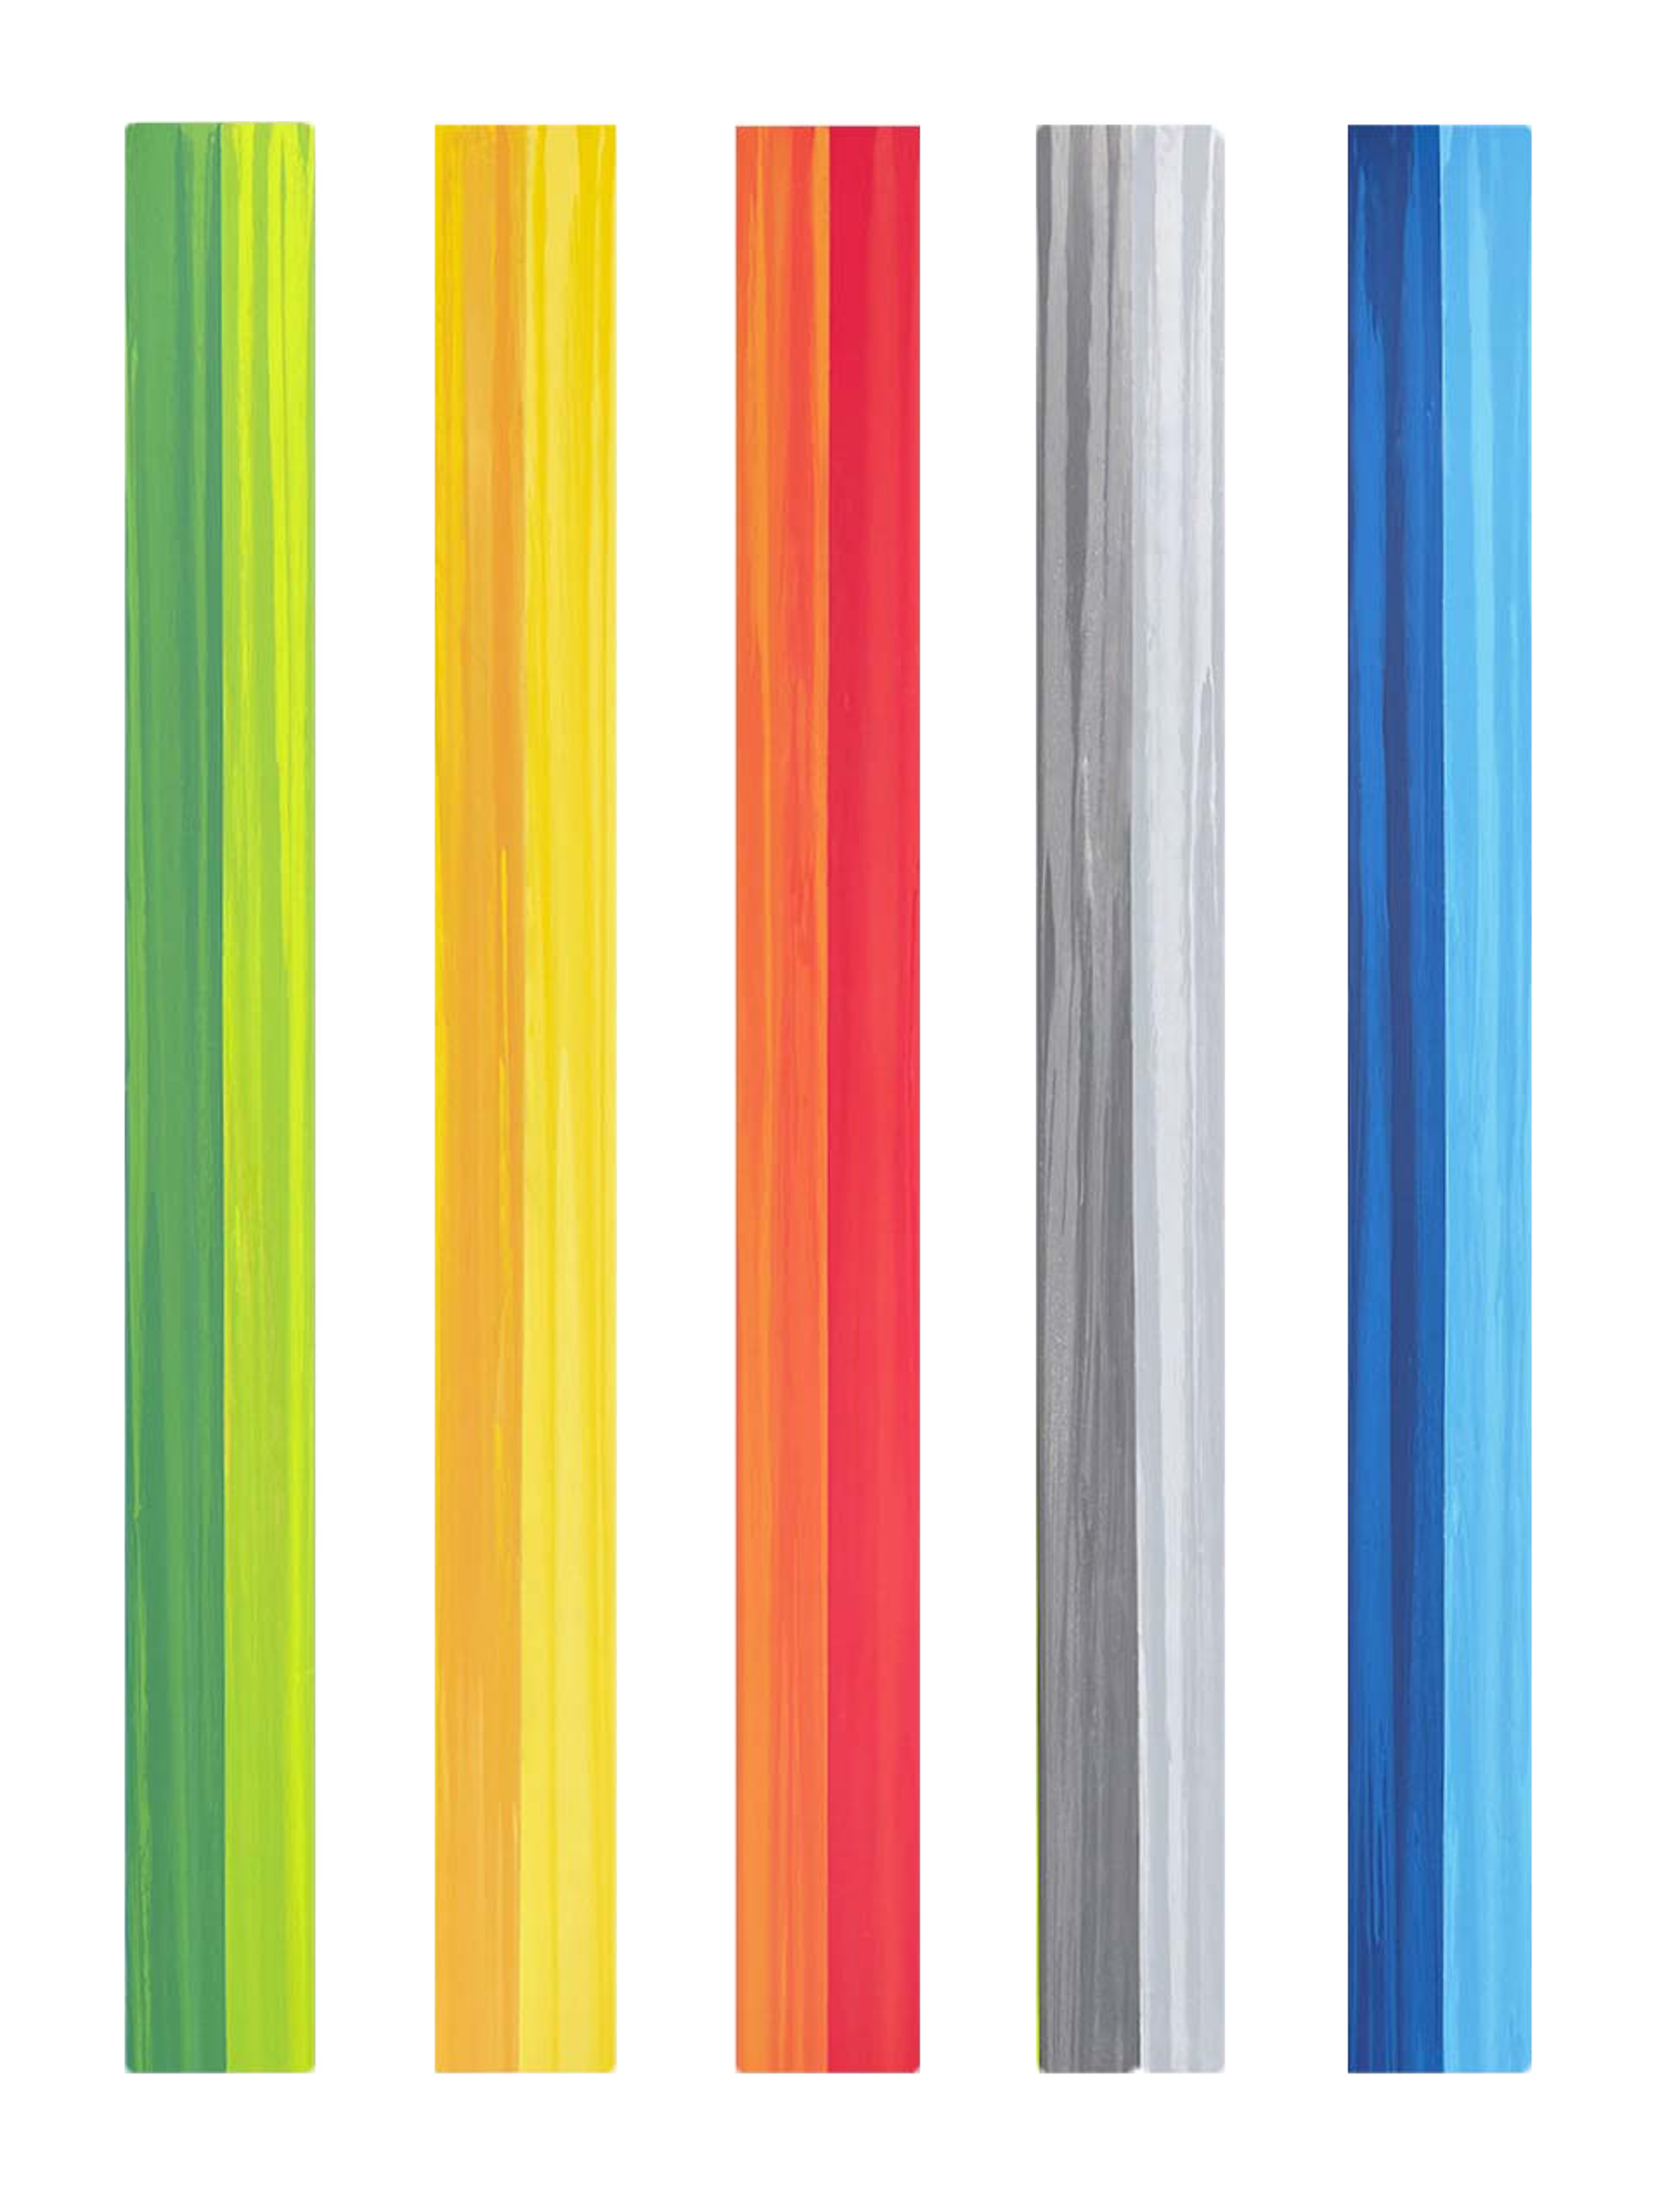 EQ in Color Series 22, 60x6" $1600 EACH by Andrzej Karwacki